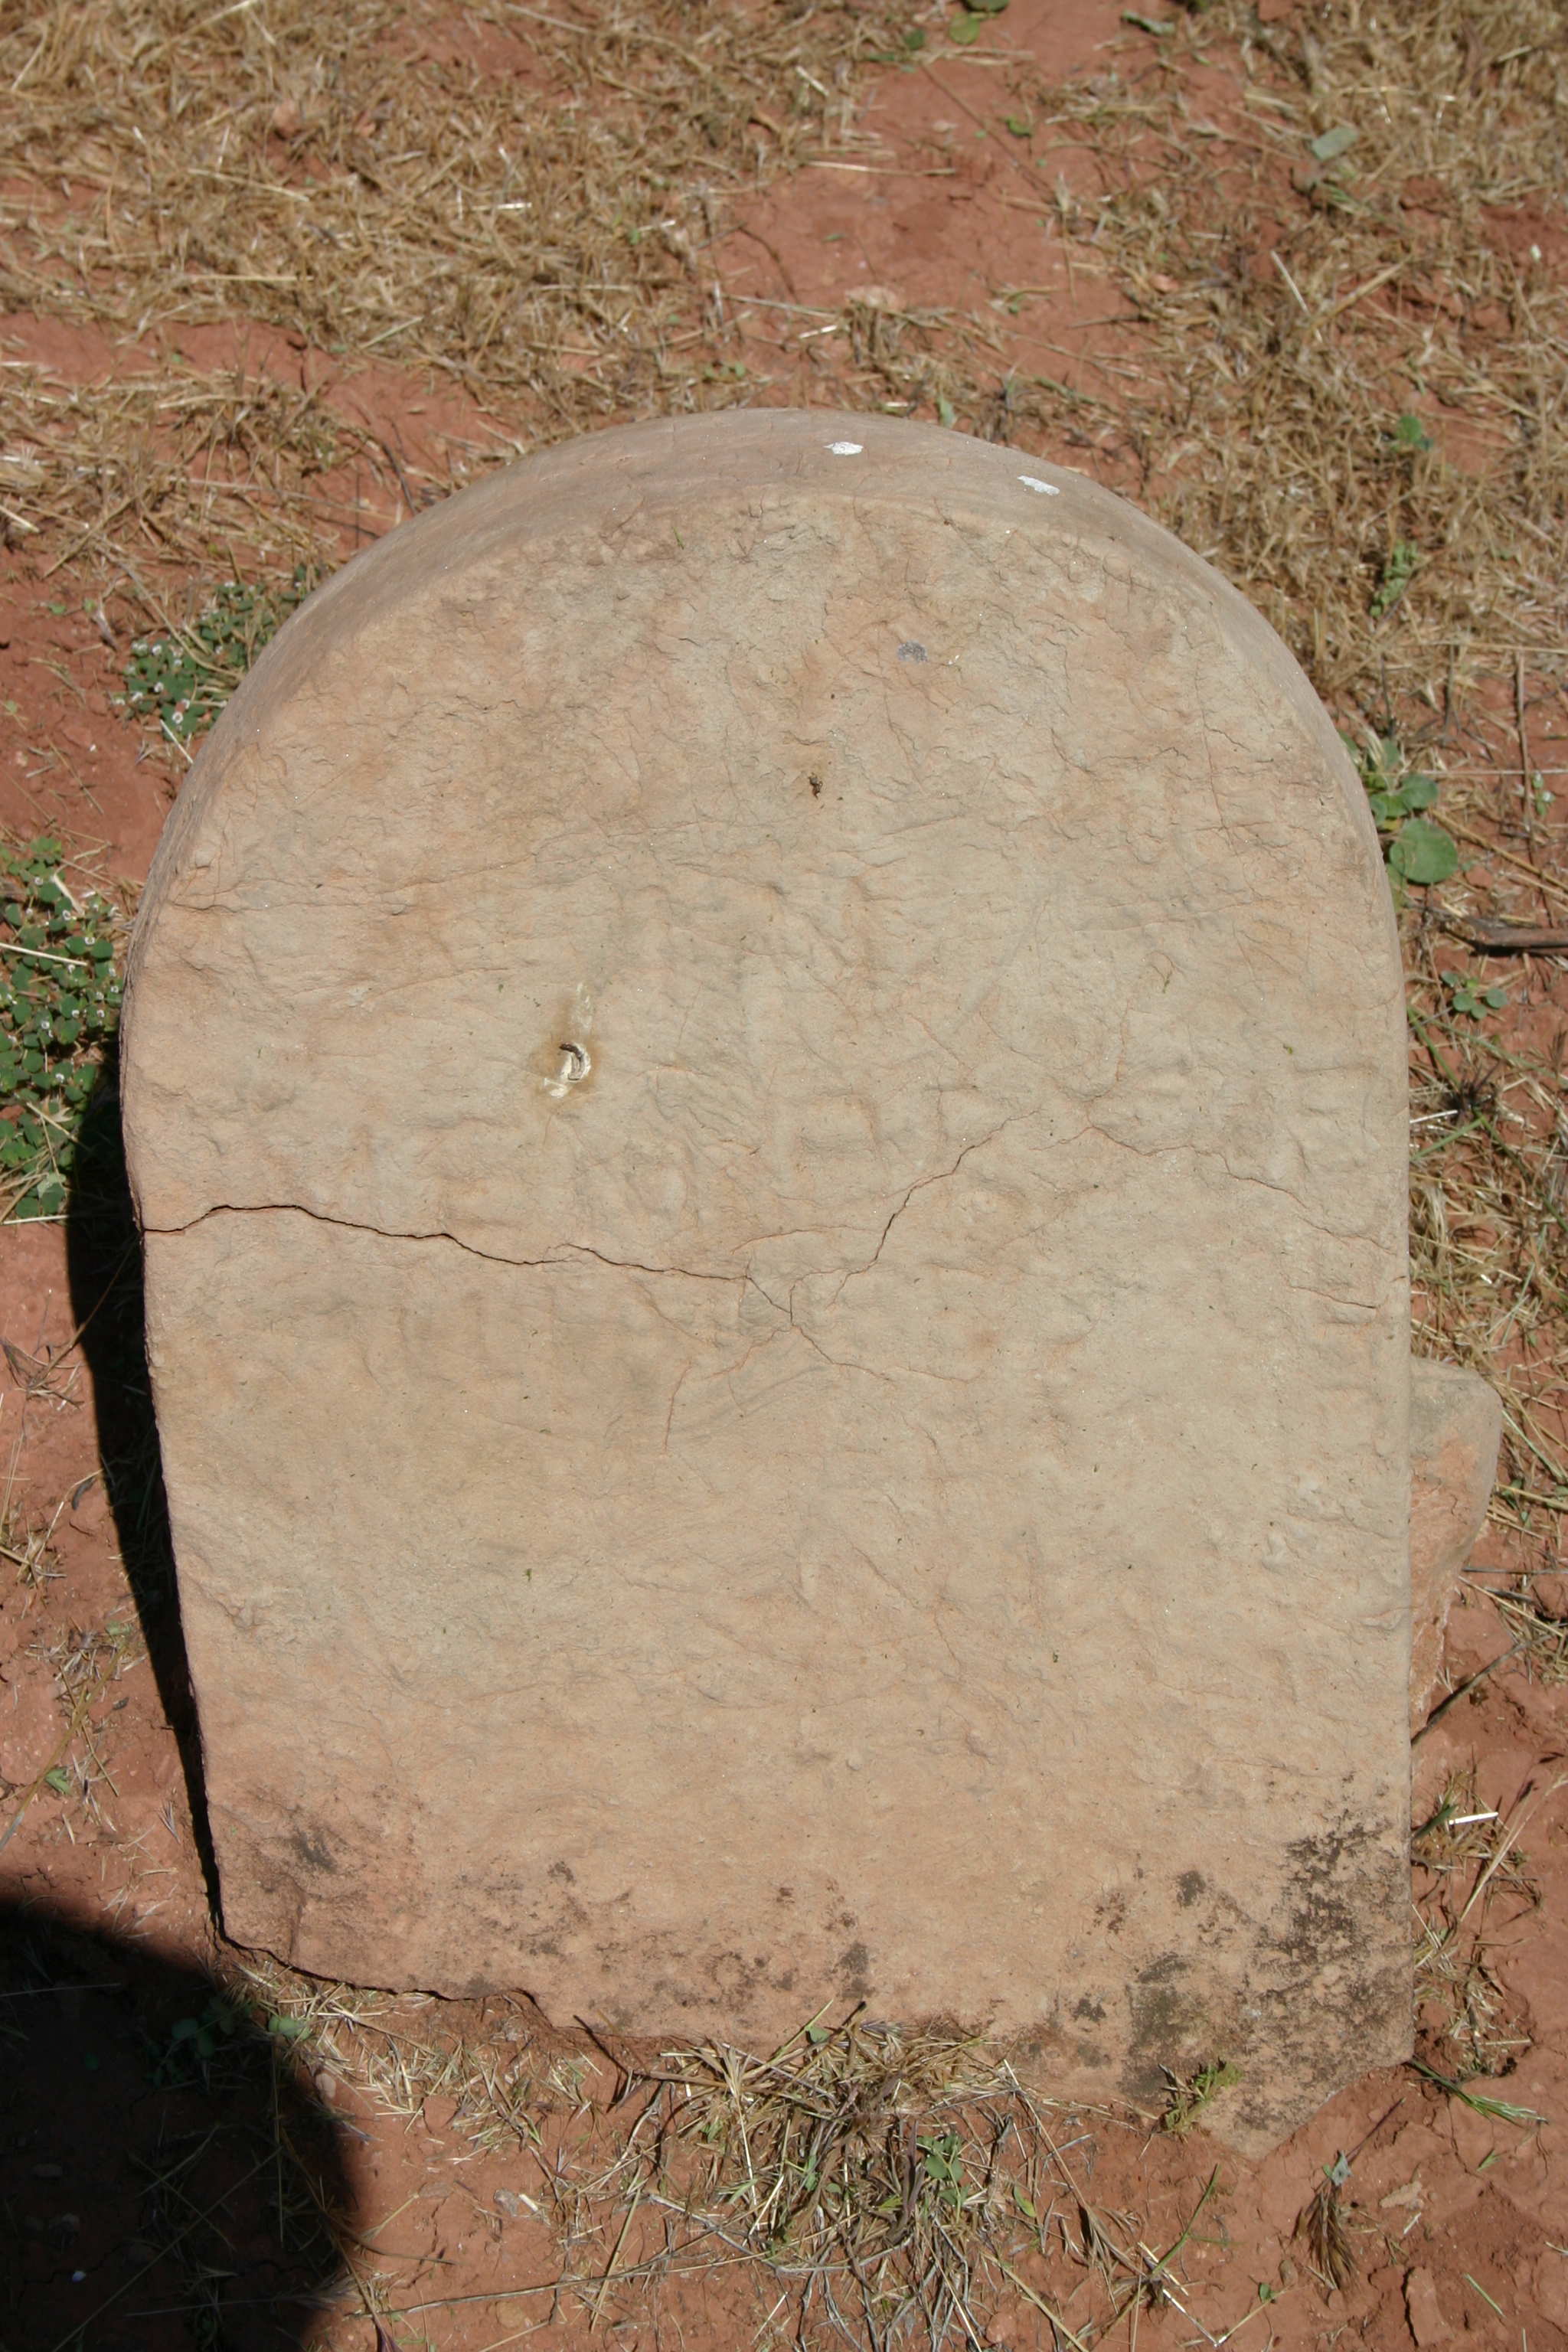 Gravestone in the Shunesburg Cemetery